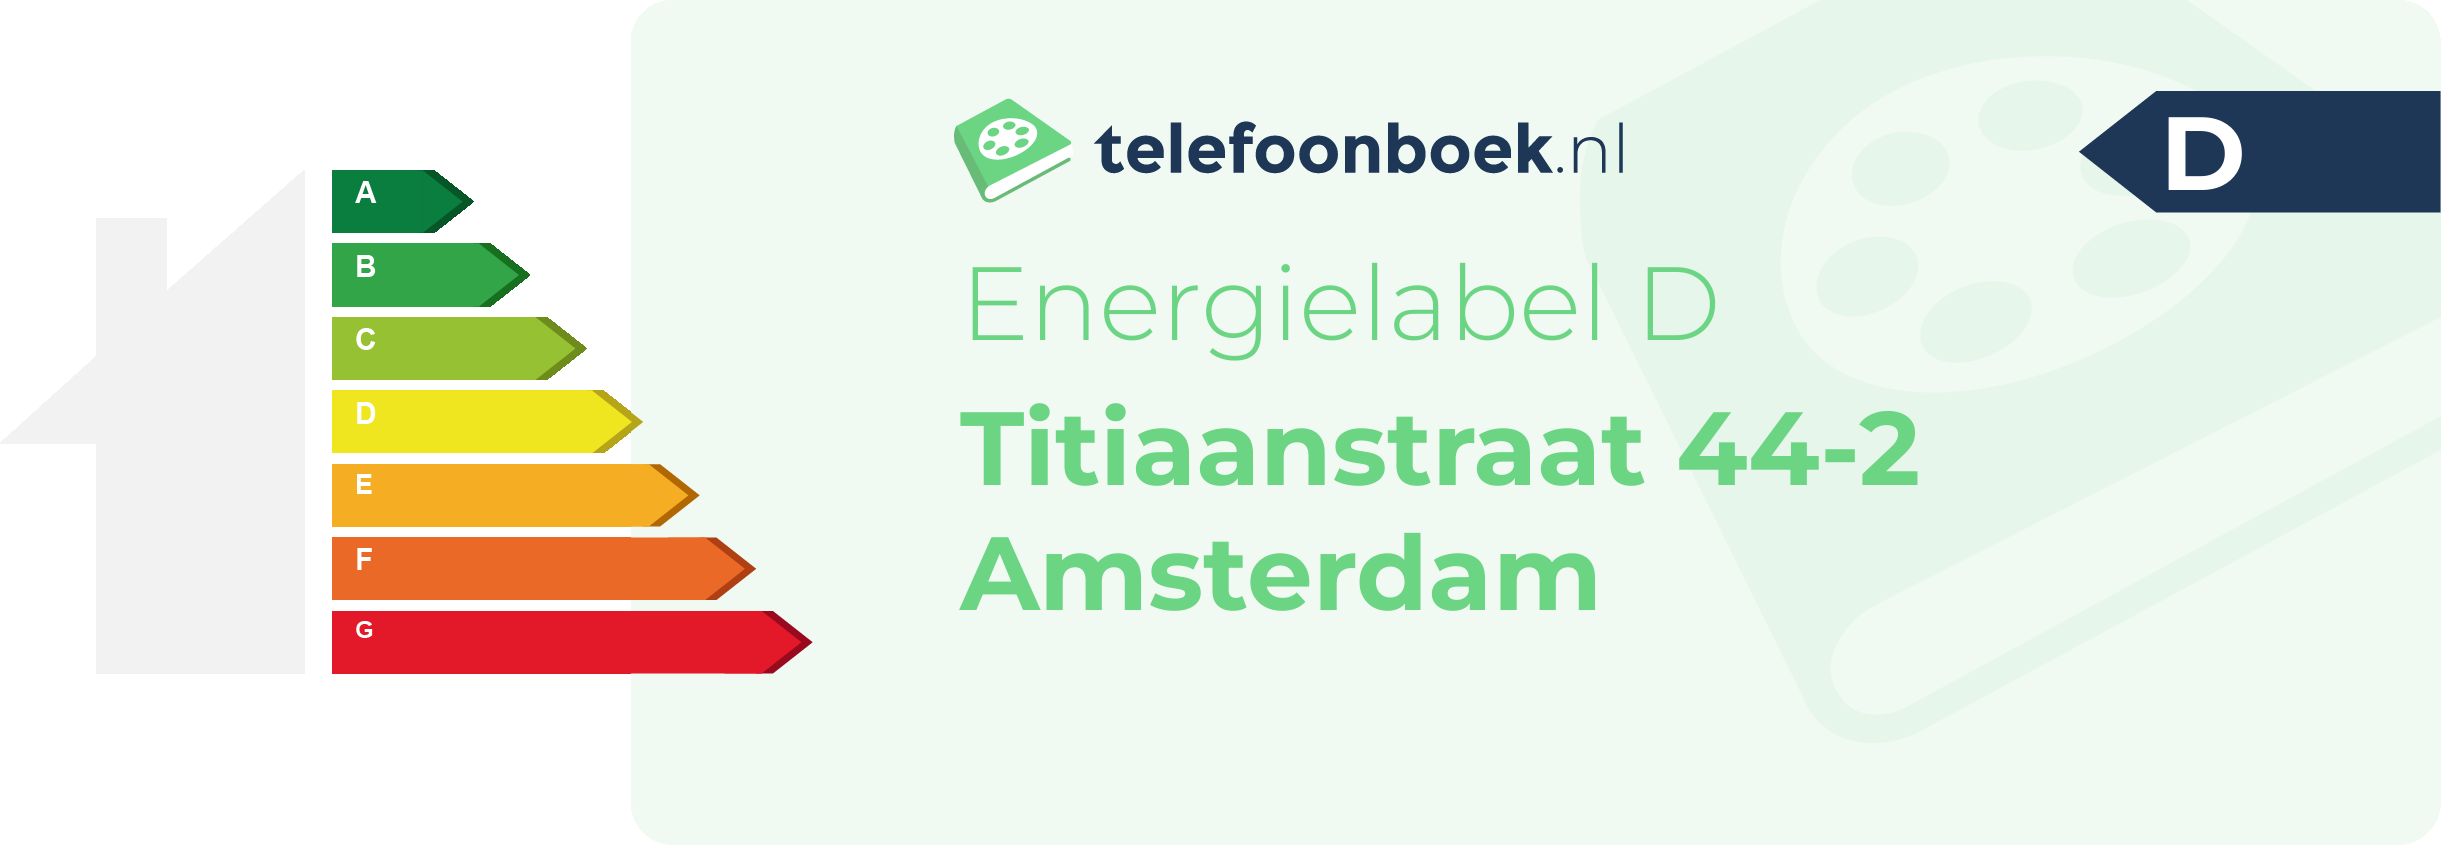 Energielabel Titiaanstraat 44-2 Amsterdam